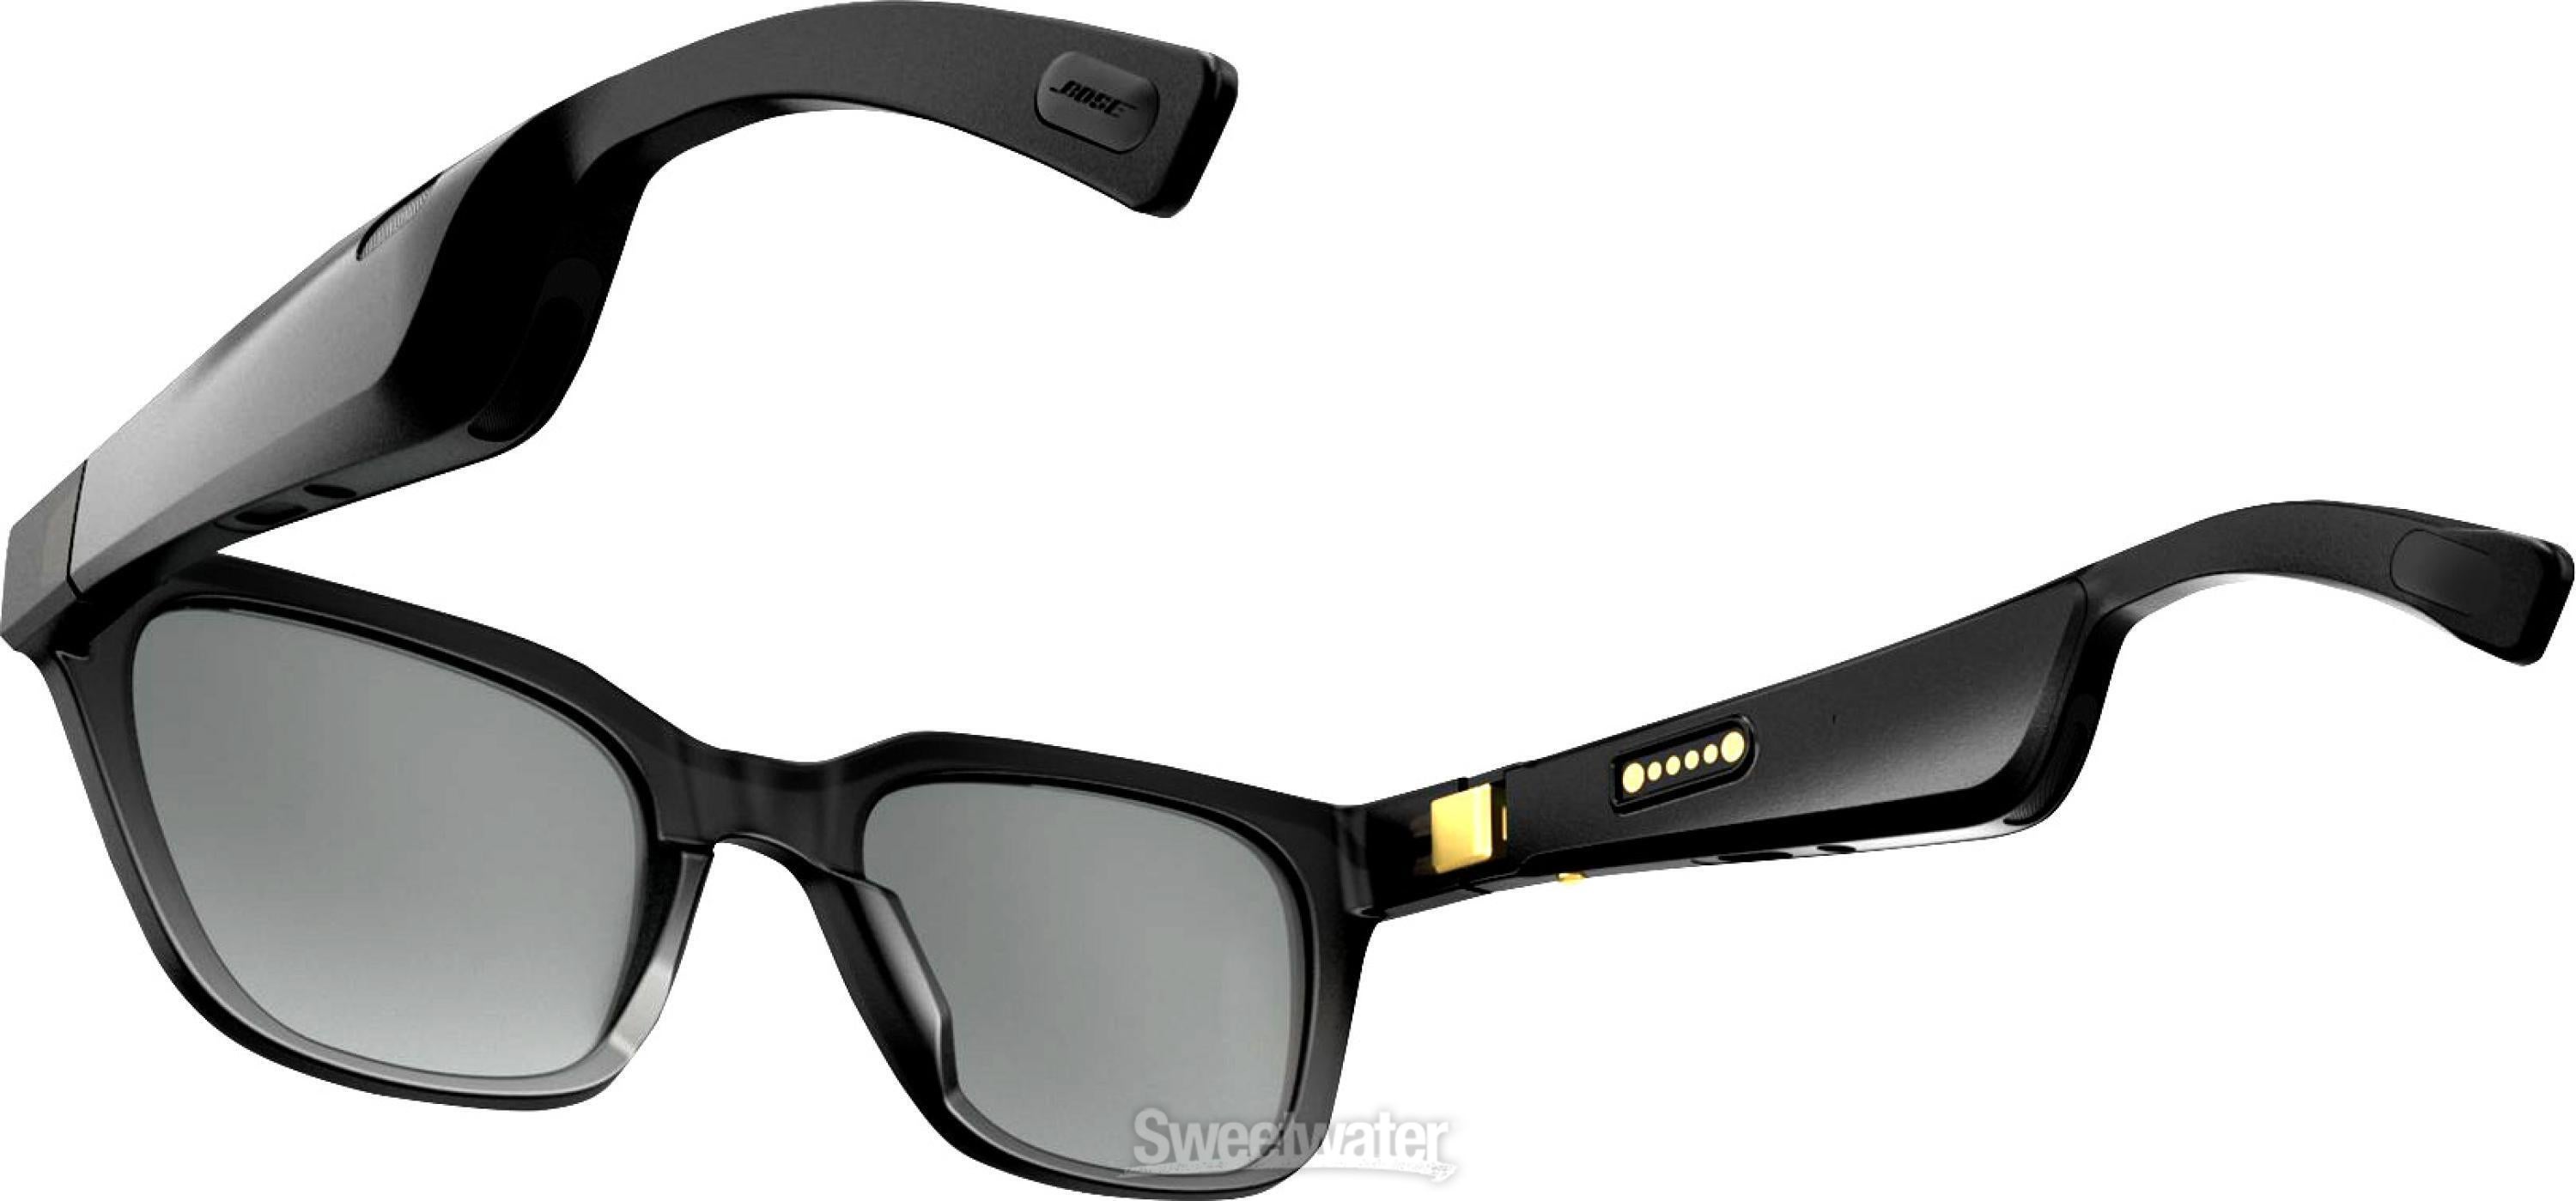 Bose Frames Audio Sunglasses Alto - Black | Sweetwater